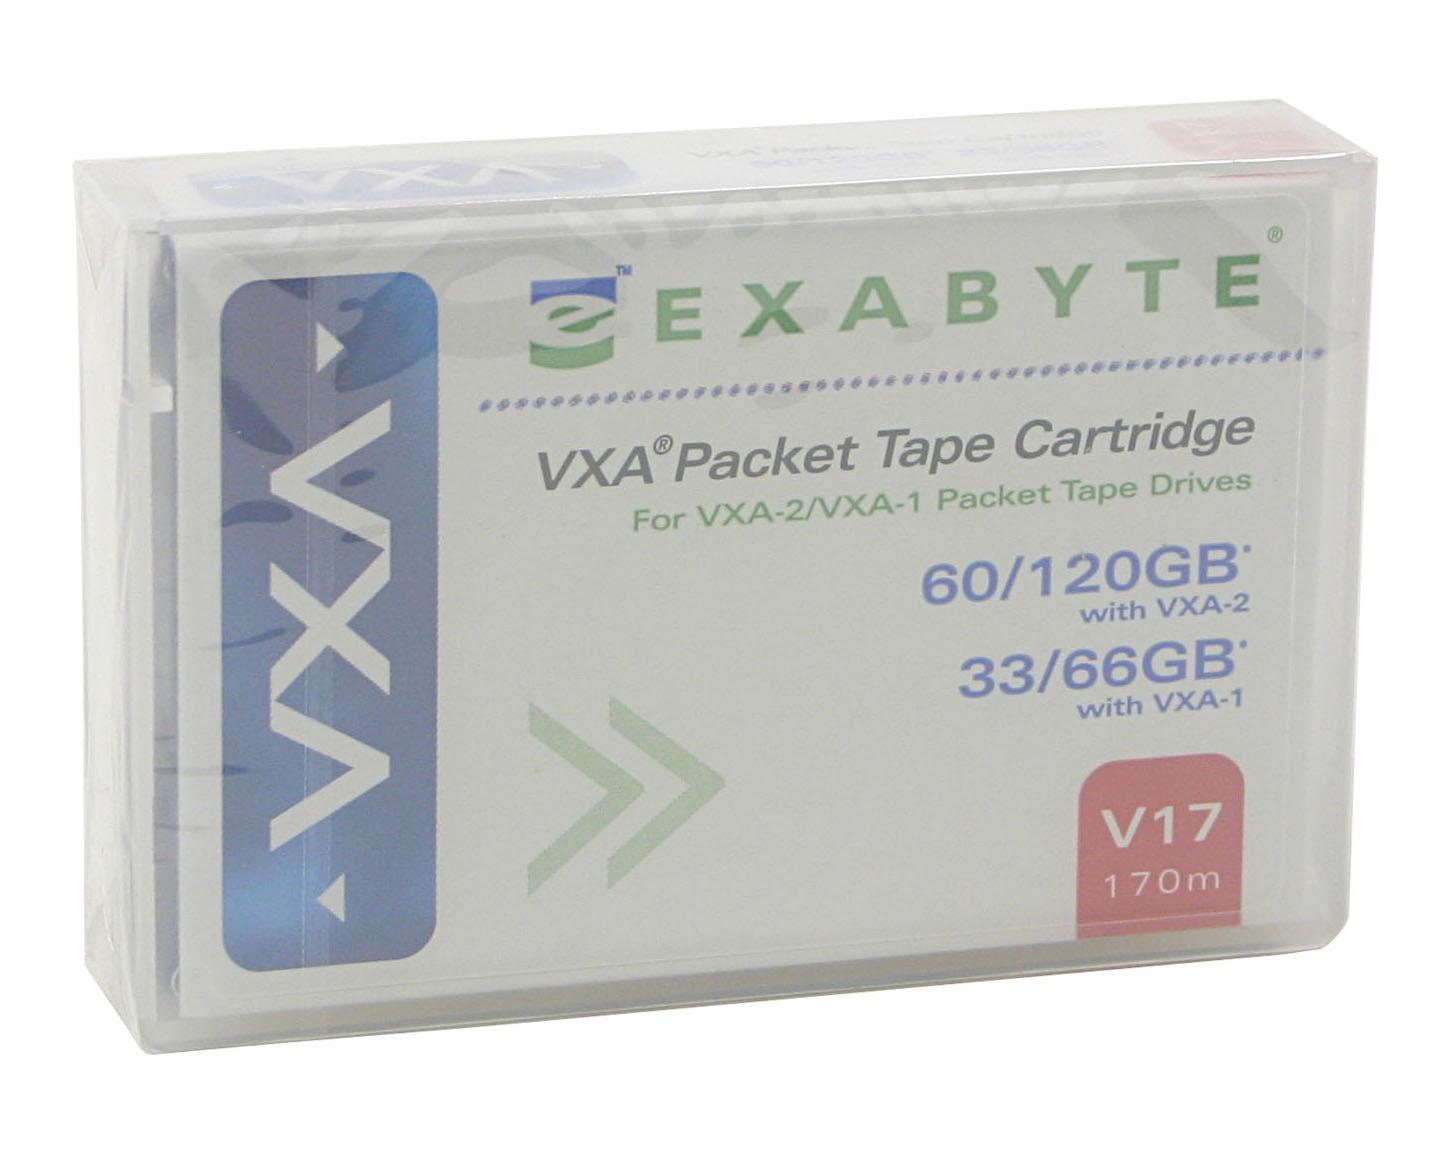 EXABYTE 111.00103 33/66 GB (VXA 1)
60/120 GB (VXA 2) VXA 1 / VXA 2 Tape Media 1 Pack